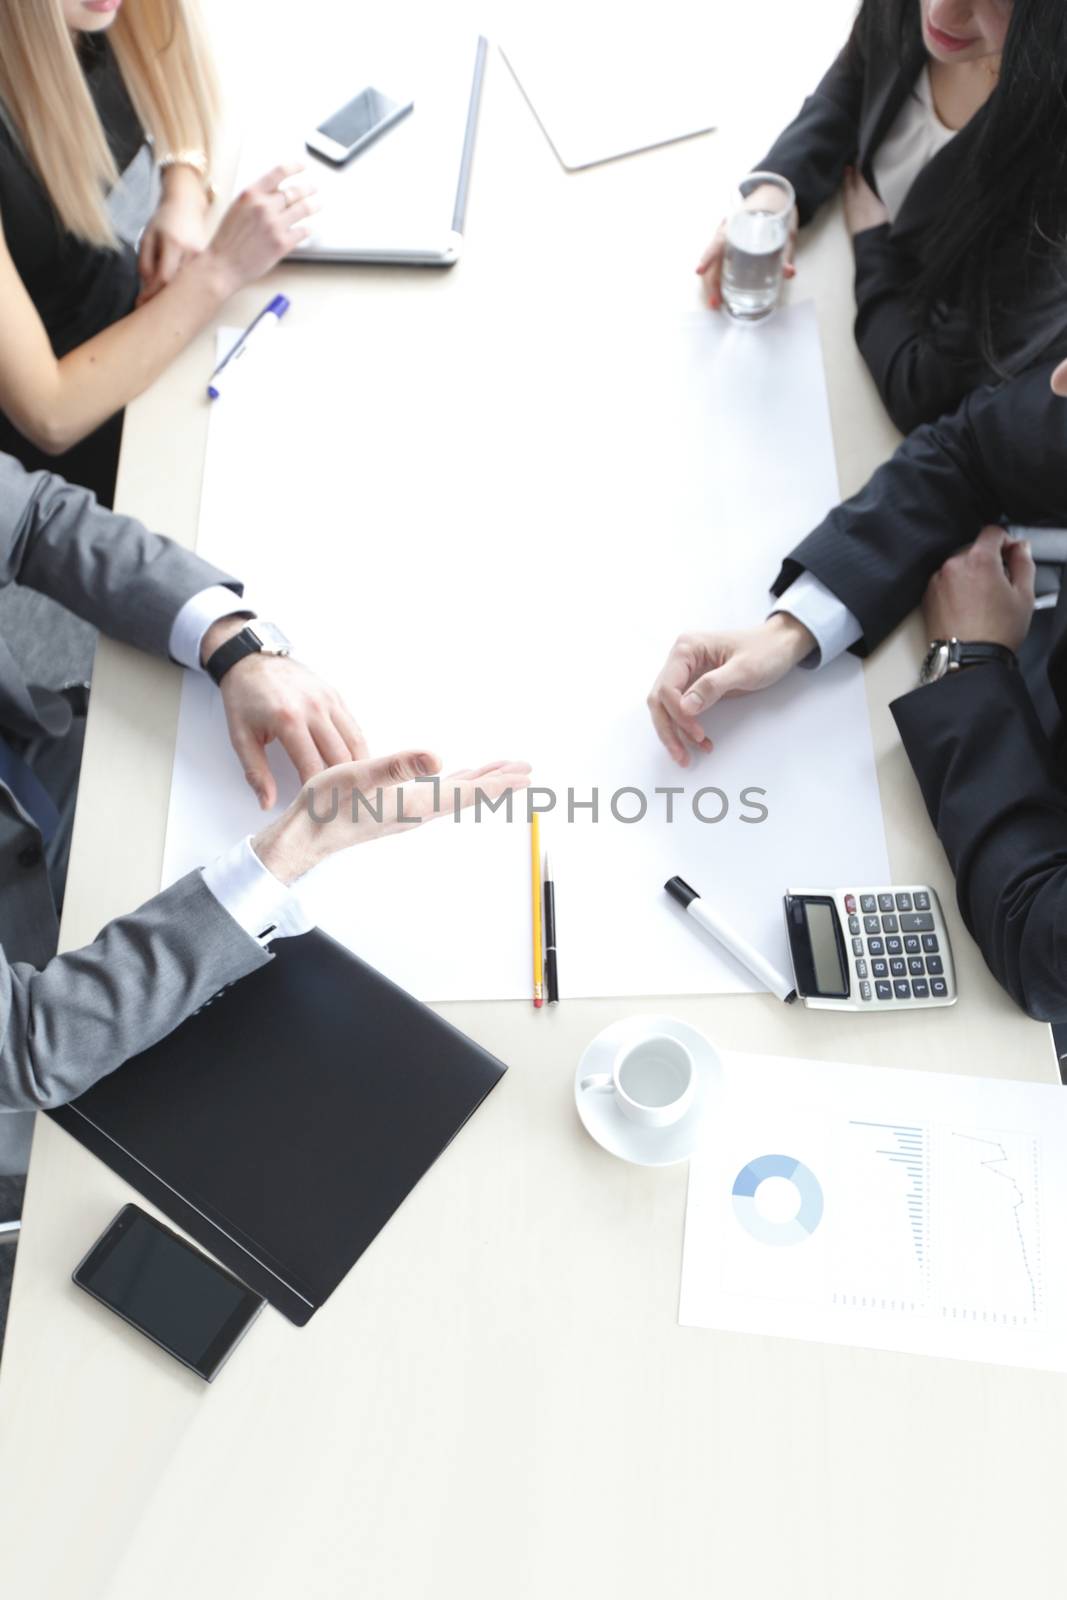 Business people brainstorming at office desk by ALotOfPeople